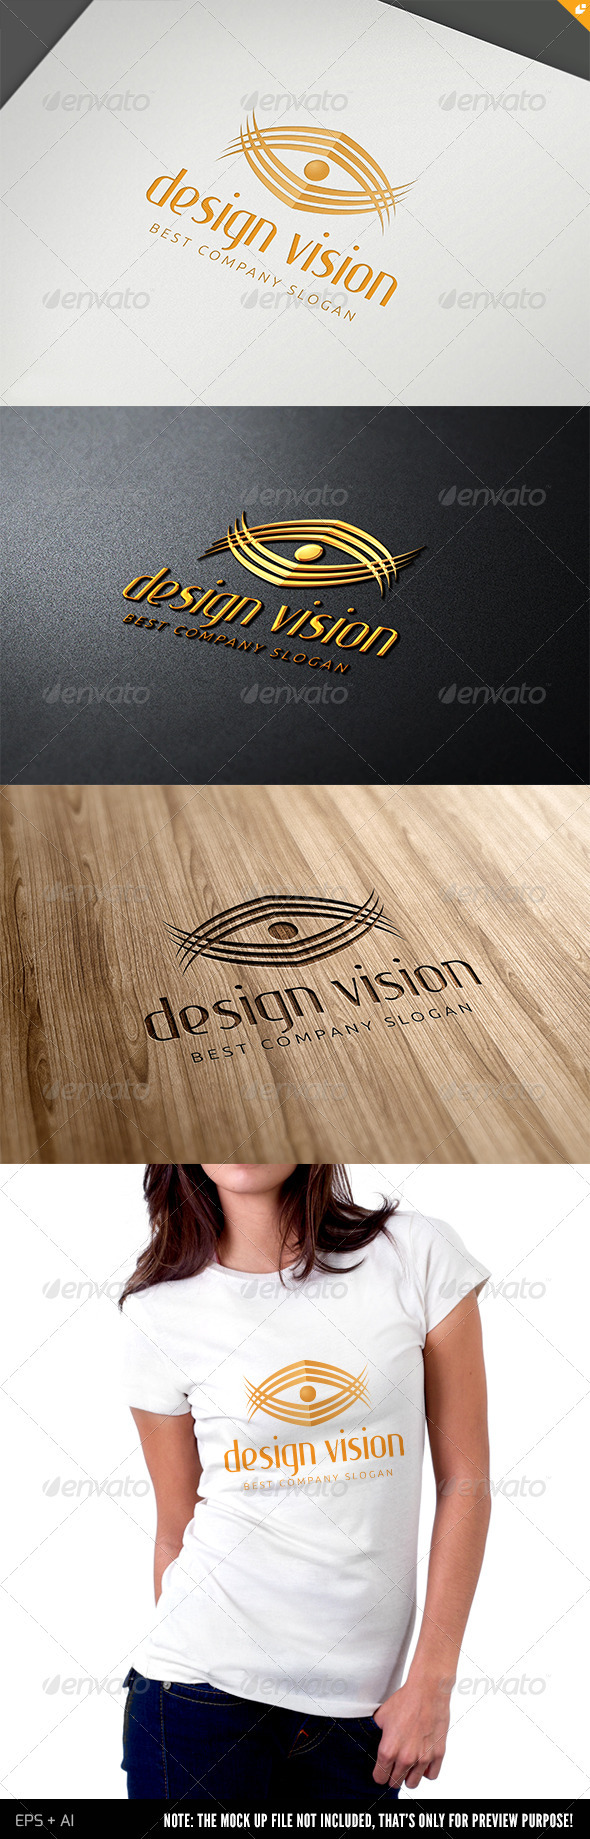 Media Design Vision Logo